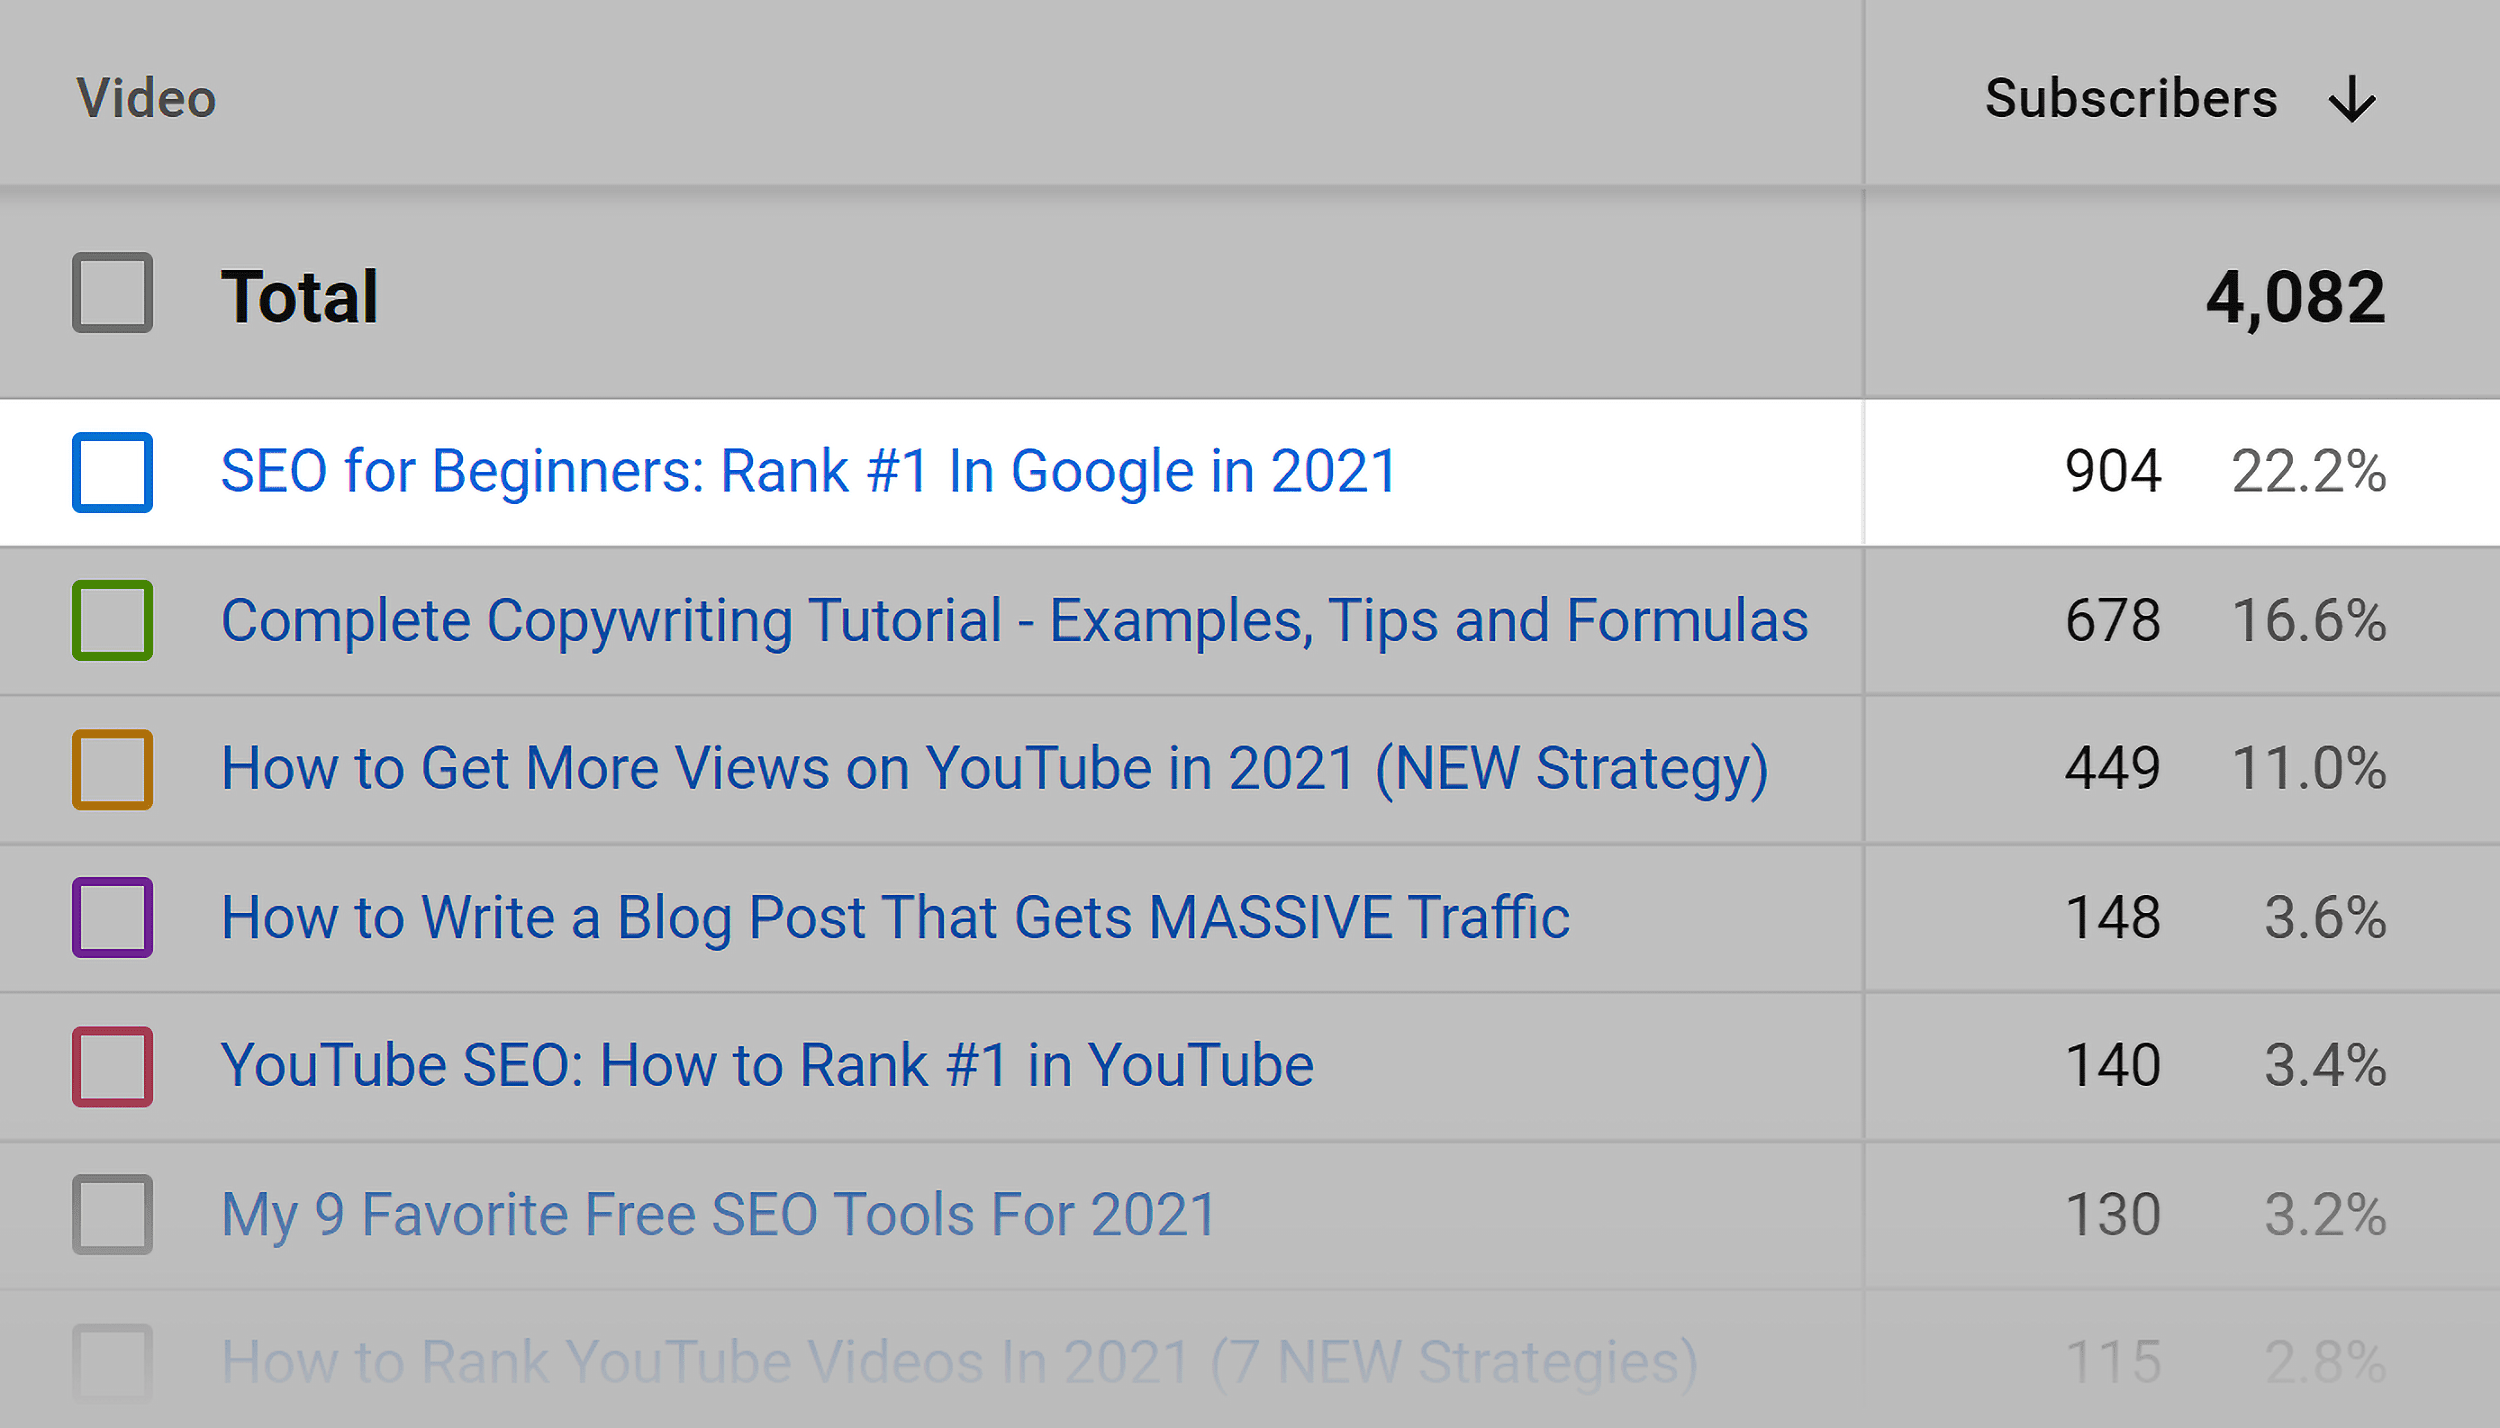 YouTube analytics – Subscribers – Top video